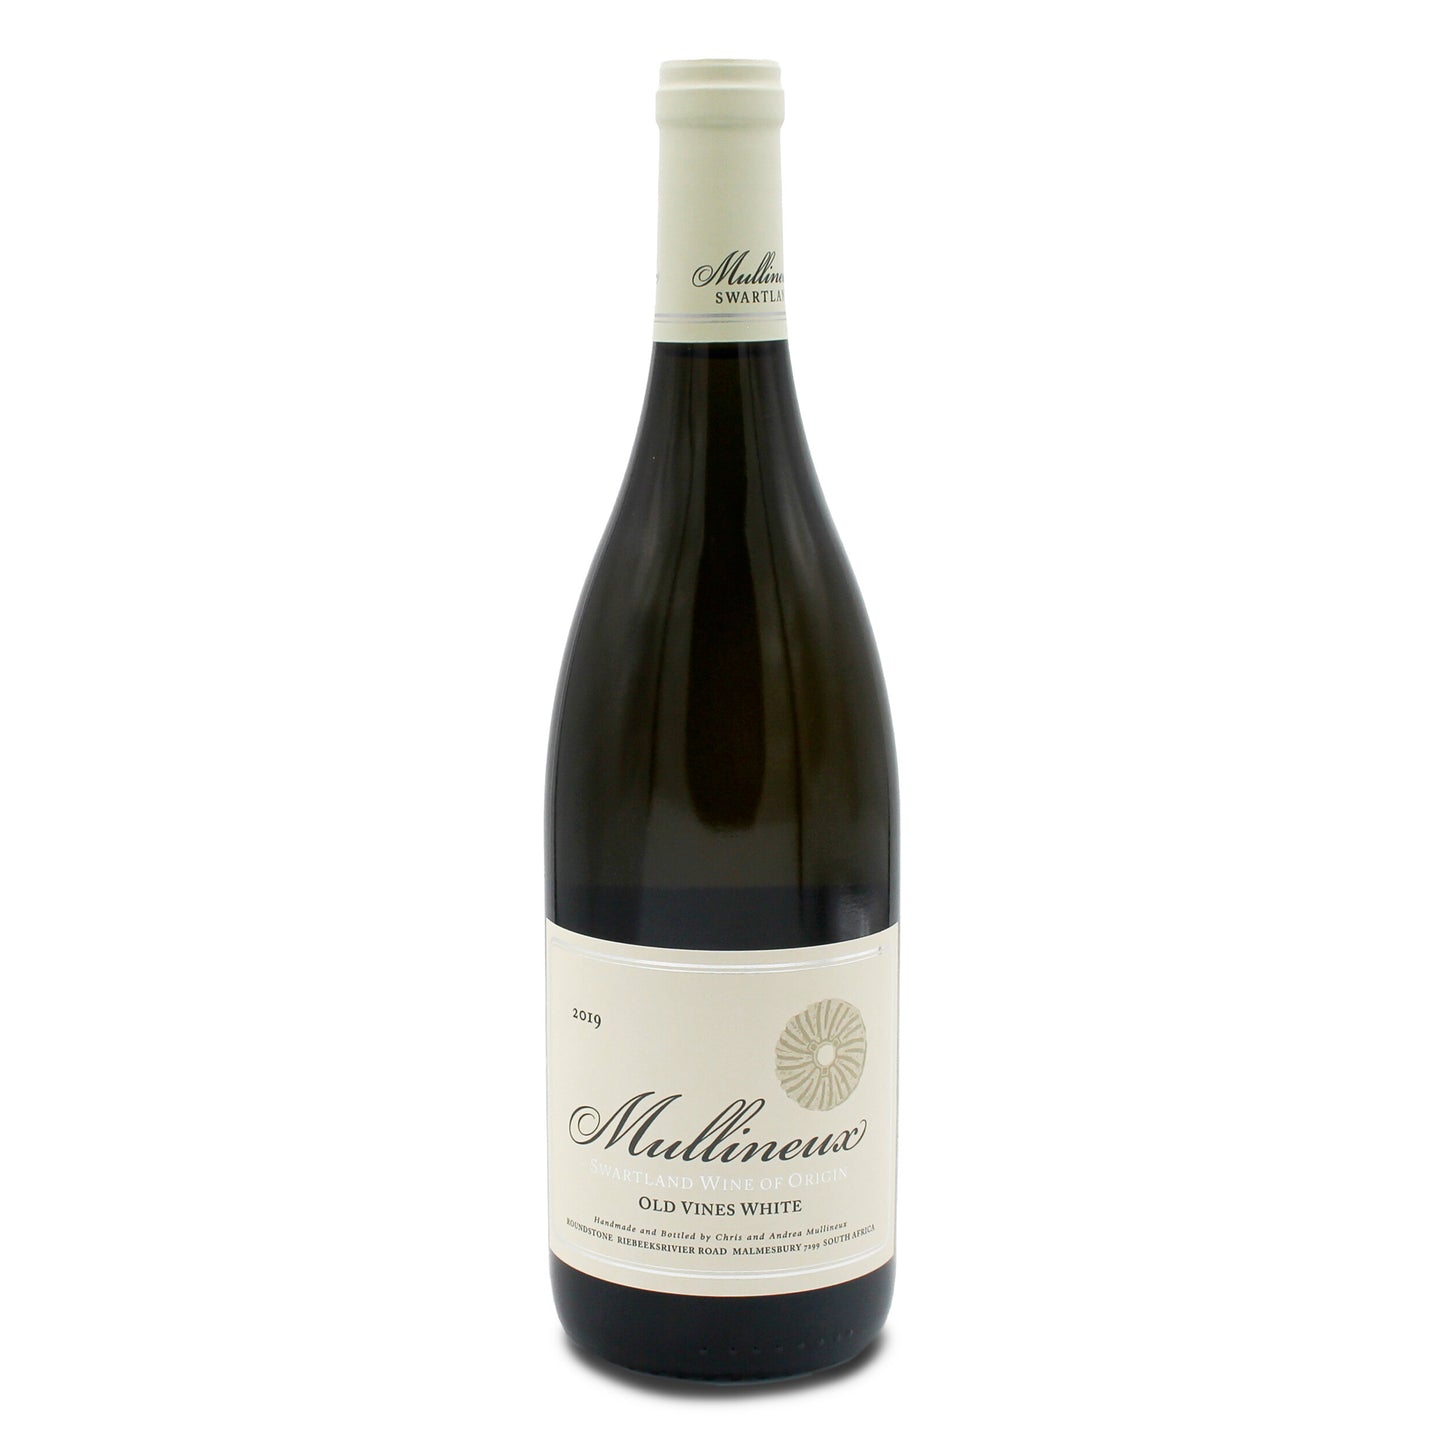 Mullineux Chenin Blanc - Old Vines White, Swartland South Africa 2020